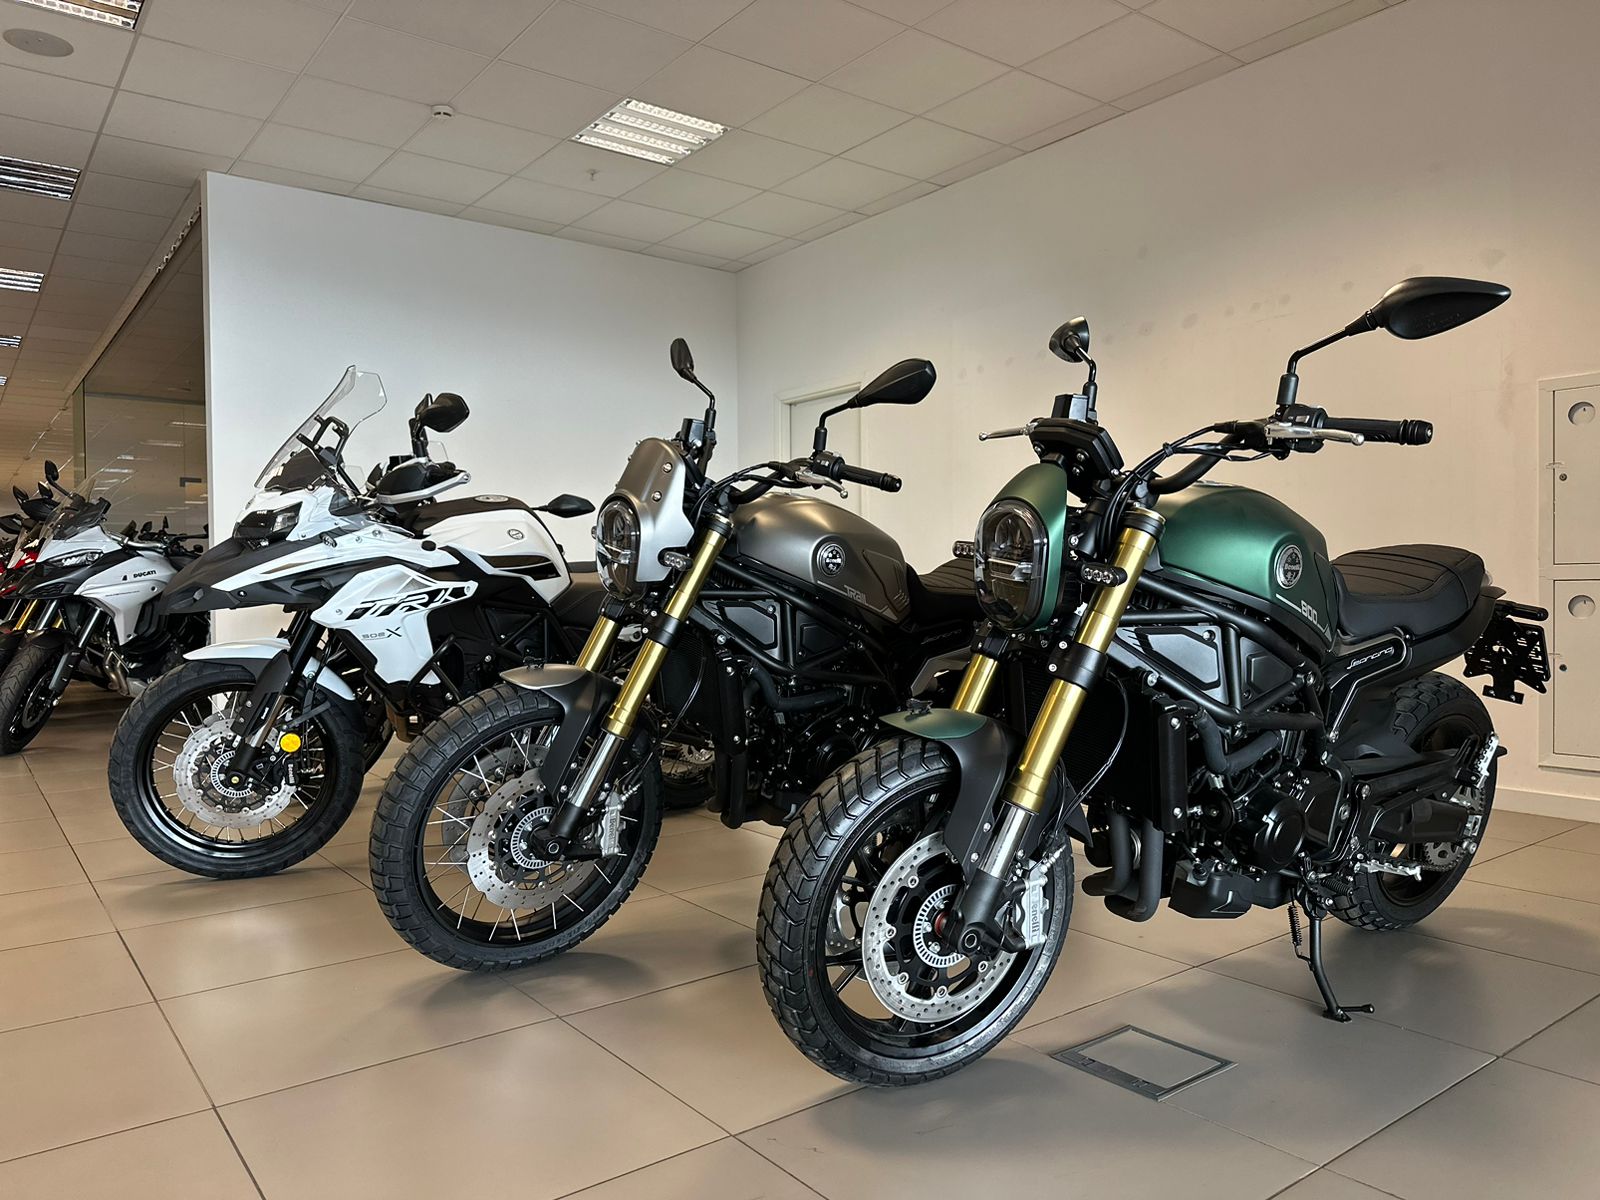 Мотоциклы Benelli цена — от 510 000 рублей и гарантия 2 года